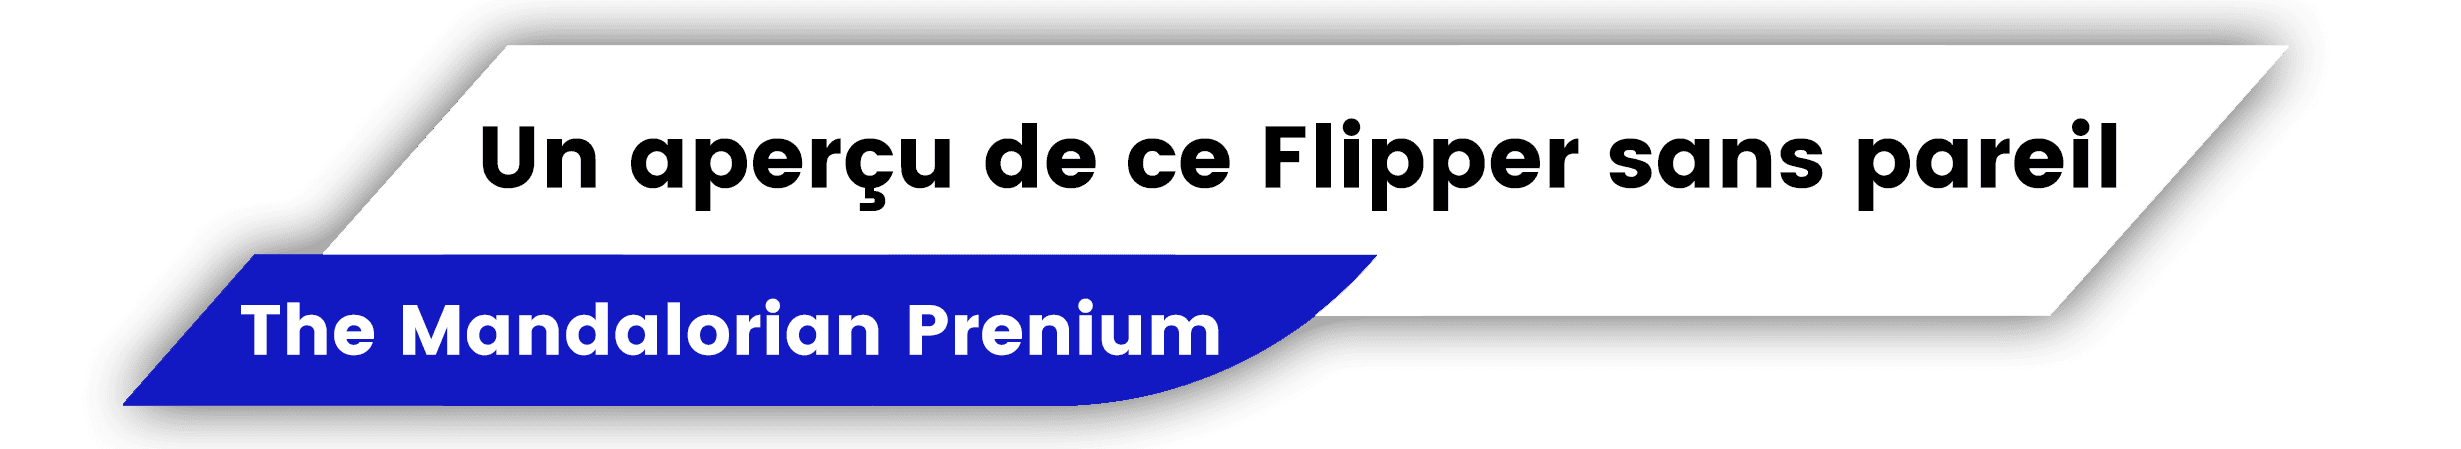 Description flipper The Mandalorian Prenium